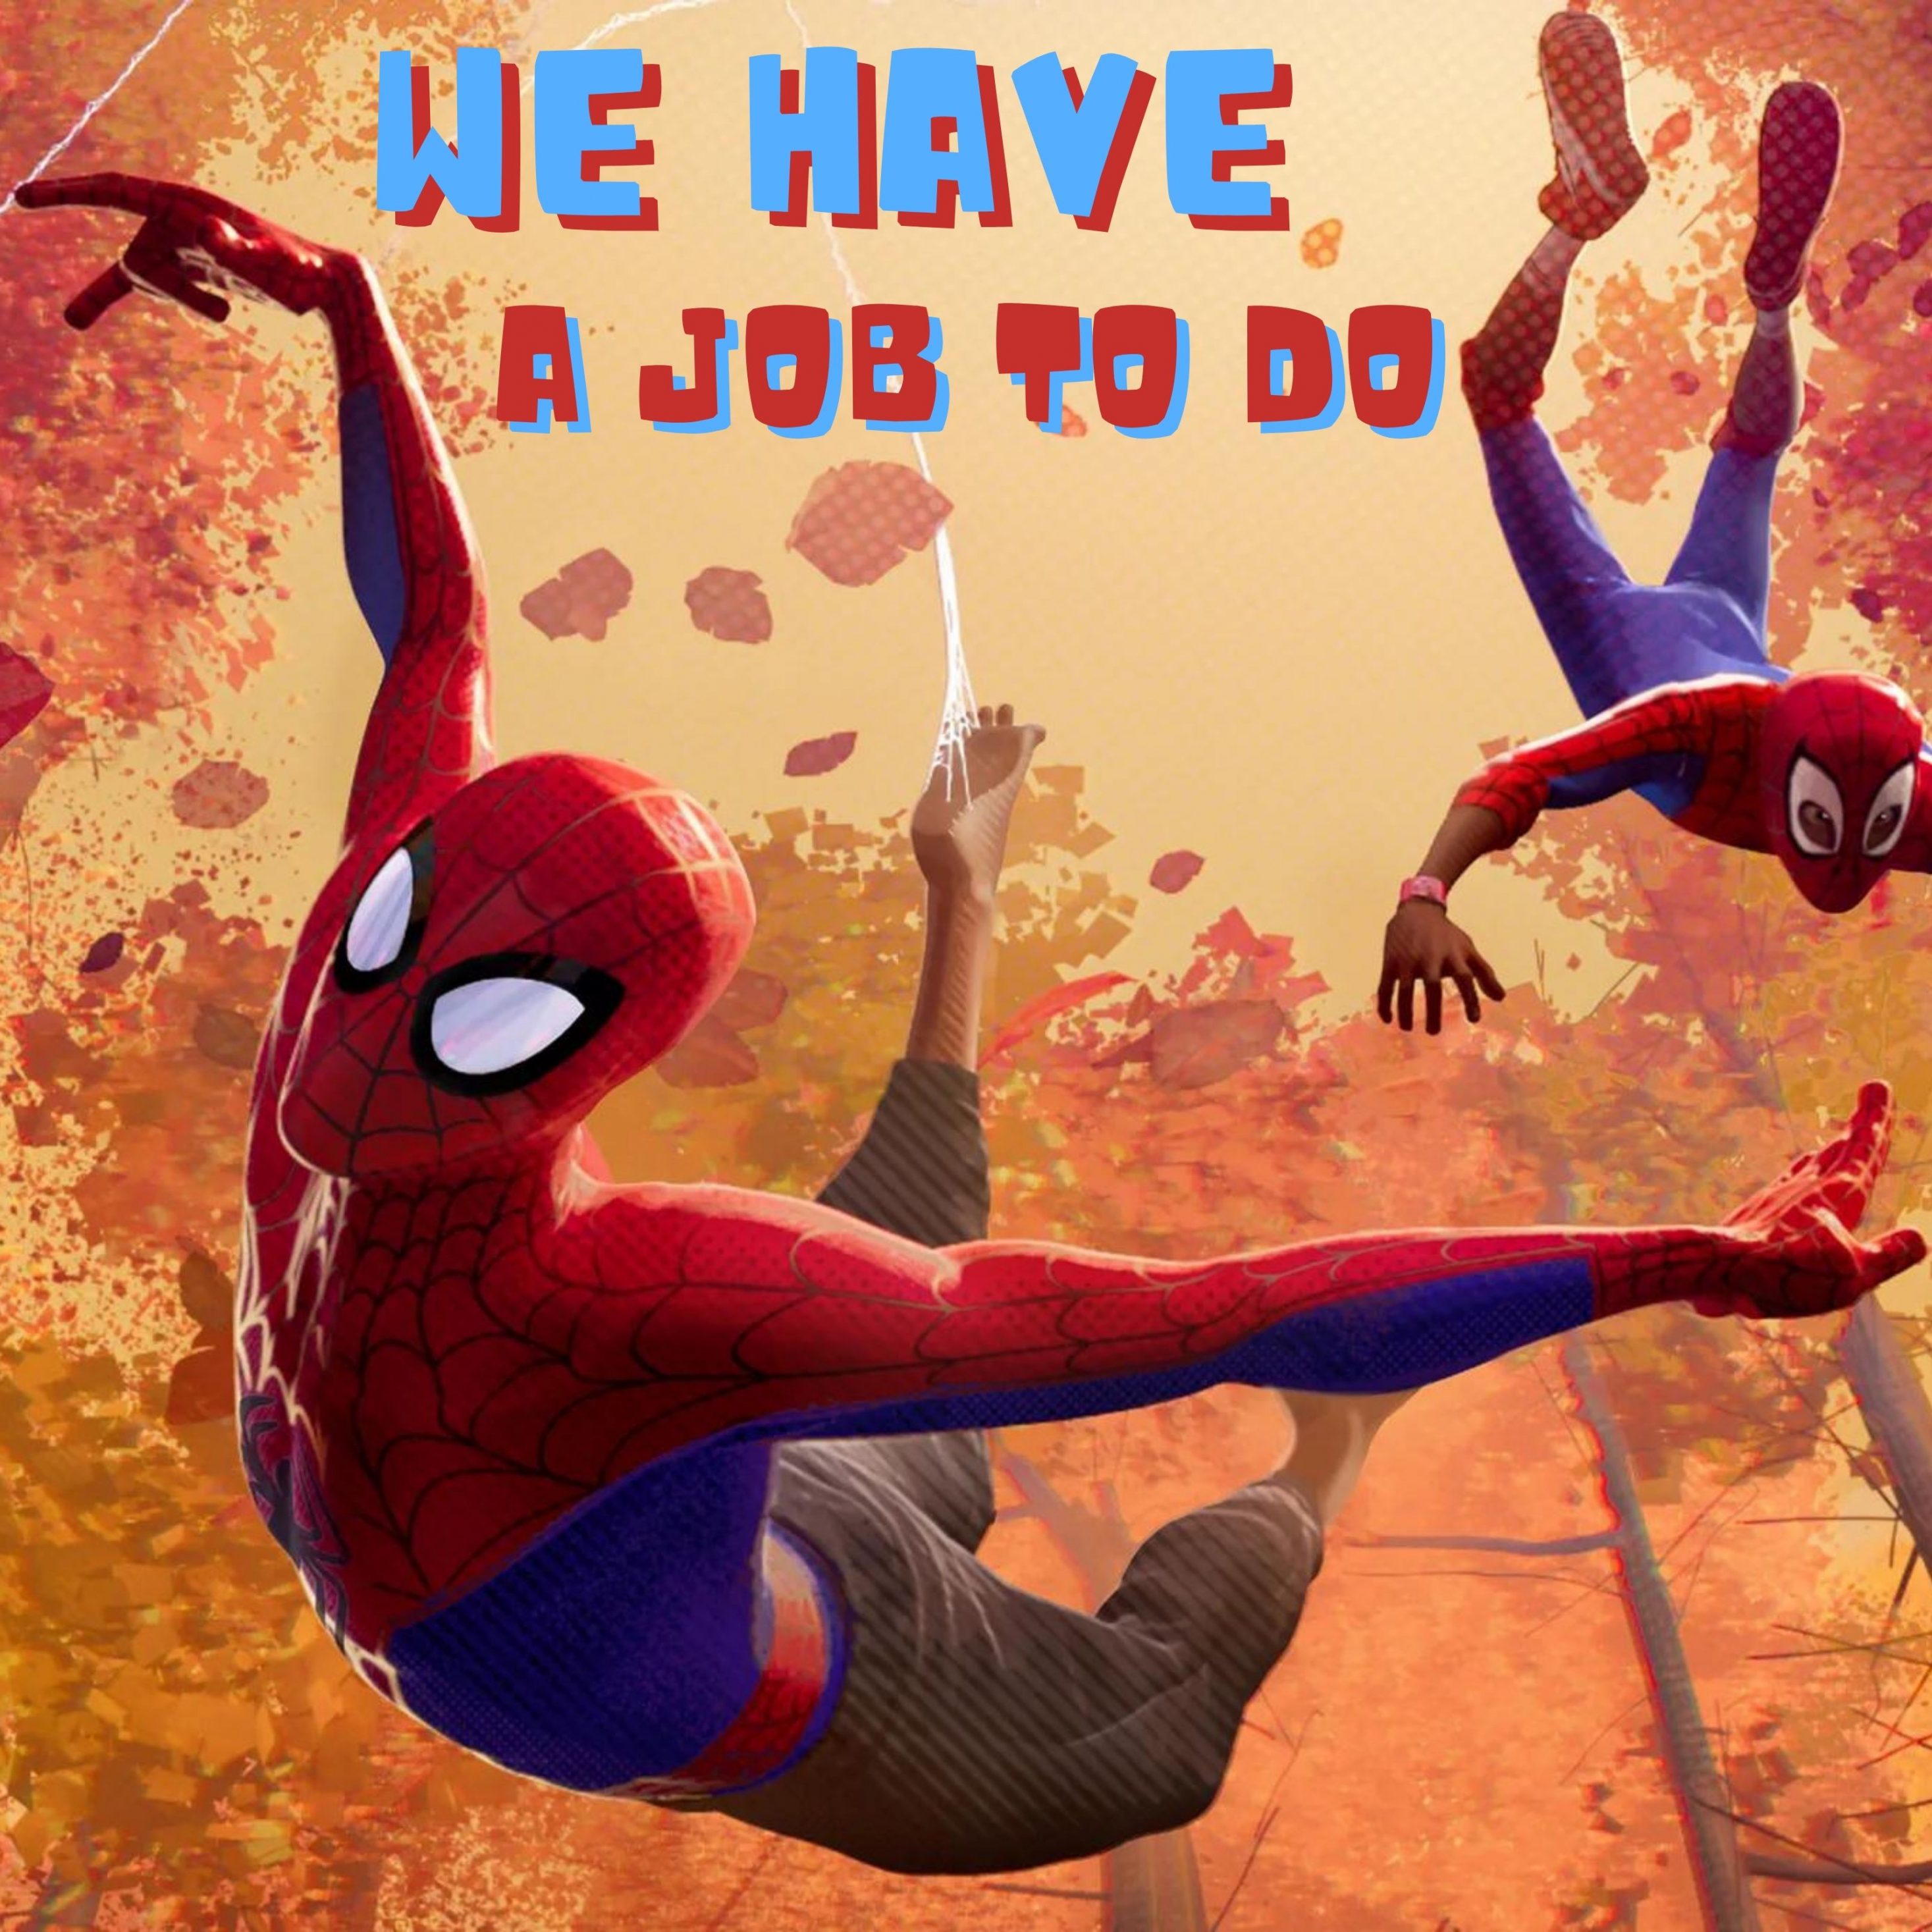 2934x2934 iOS iPad wallpaper 4k We Have a Job to Do Duo Spiderman Ipad Wallpaper 2934x2934 pixels resolution